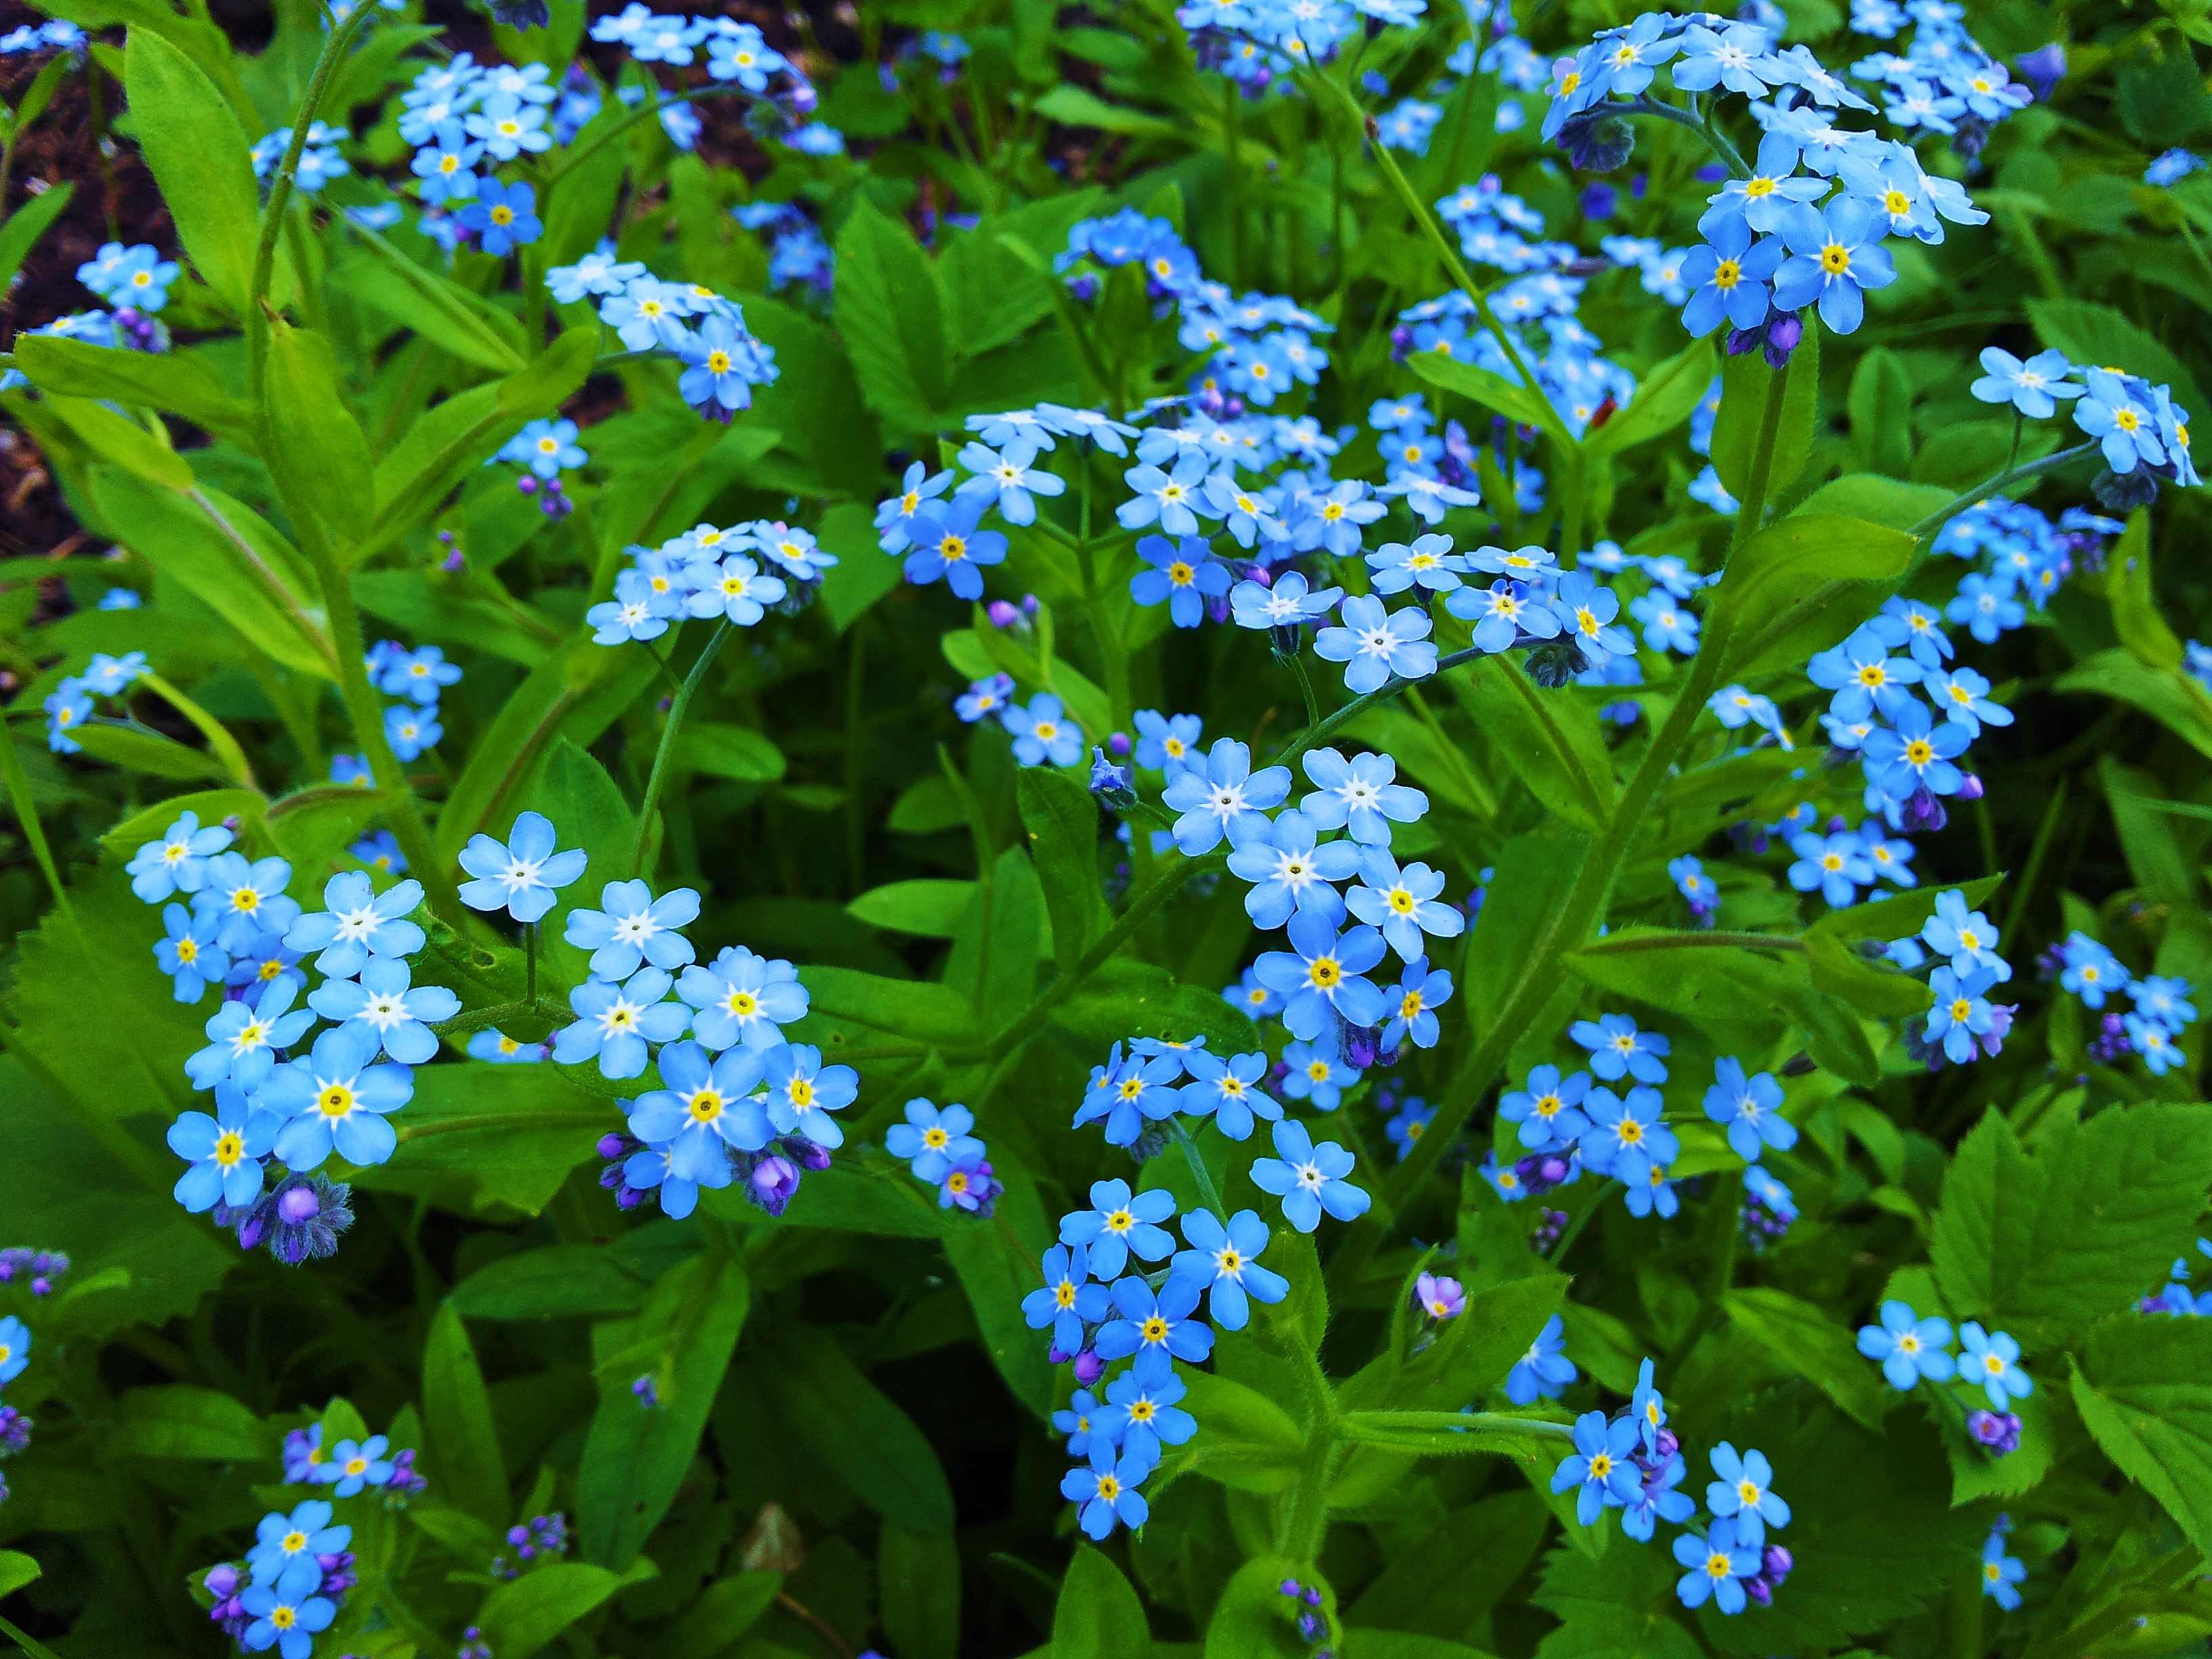 381914 descargar imagen tierra/naturaleza, nomeolvides, flor azul, flor, hoja, flores: fondos de pantalla y protectores de pantalla gratis